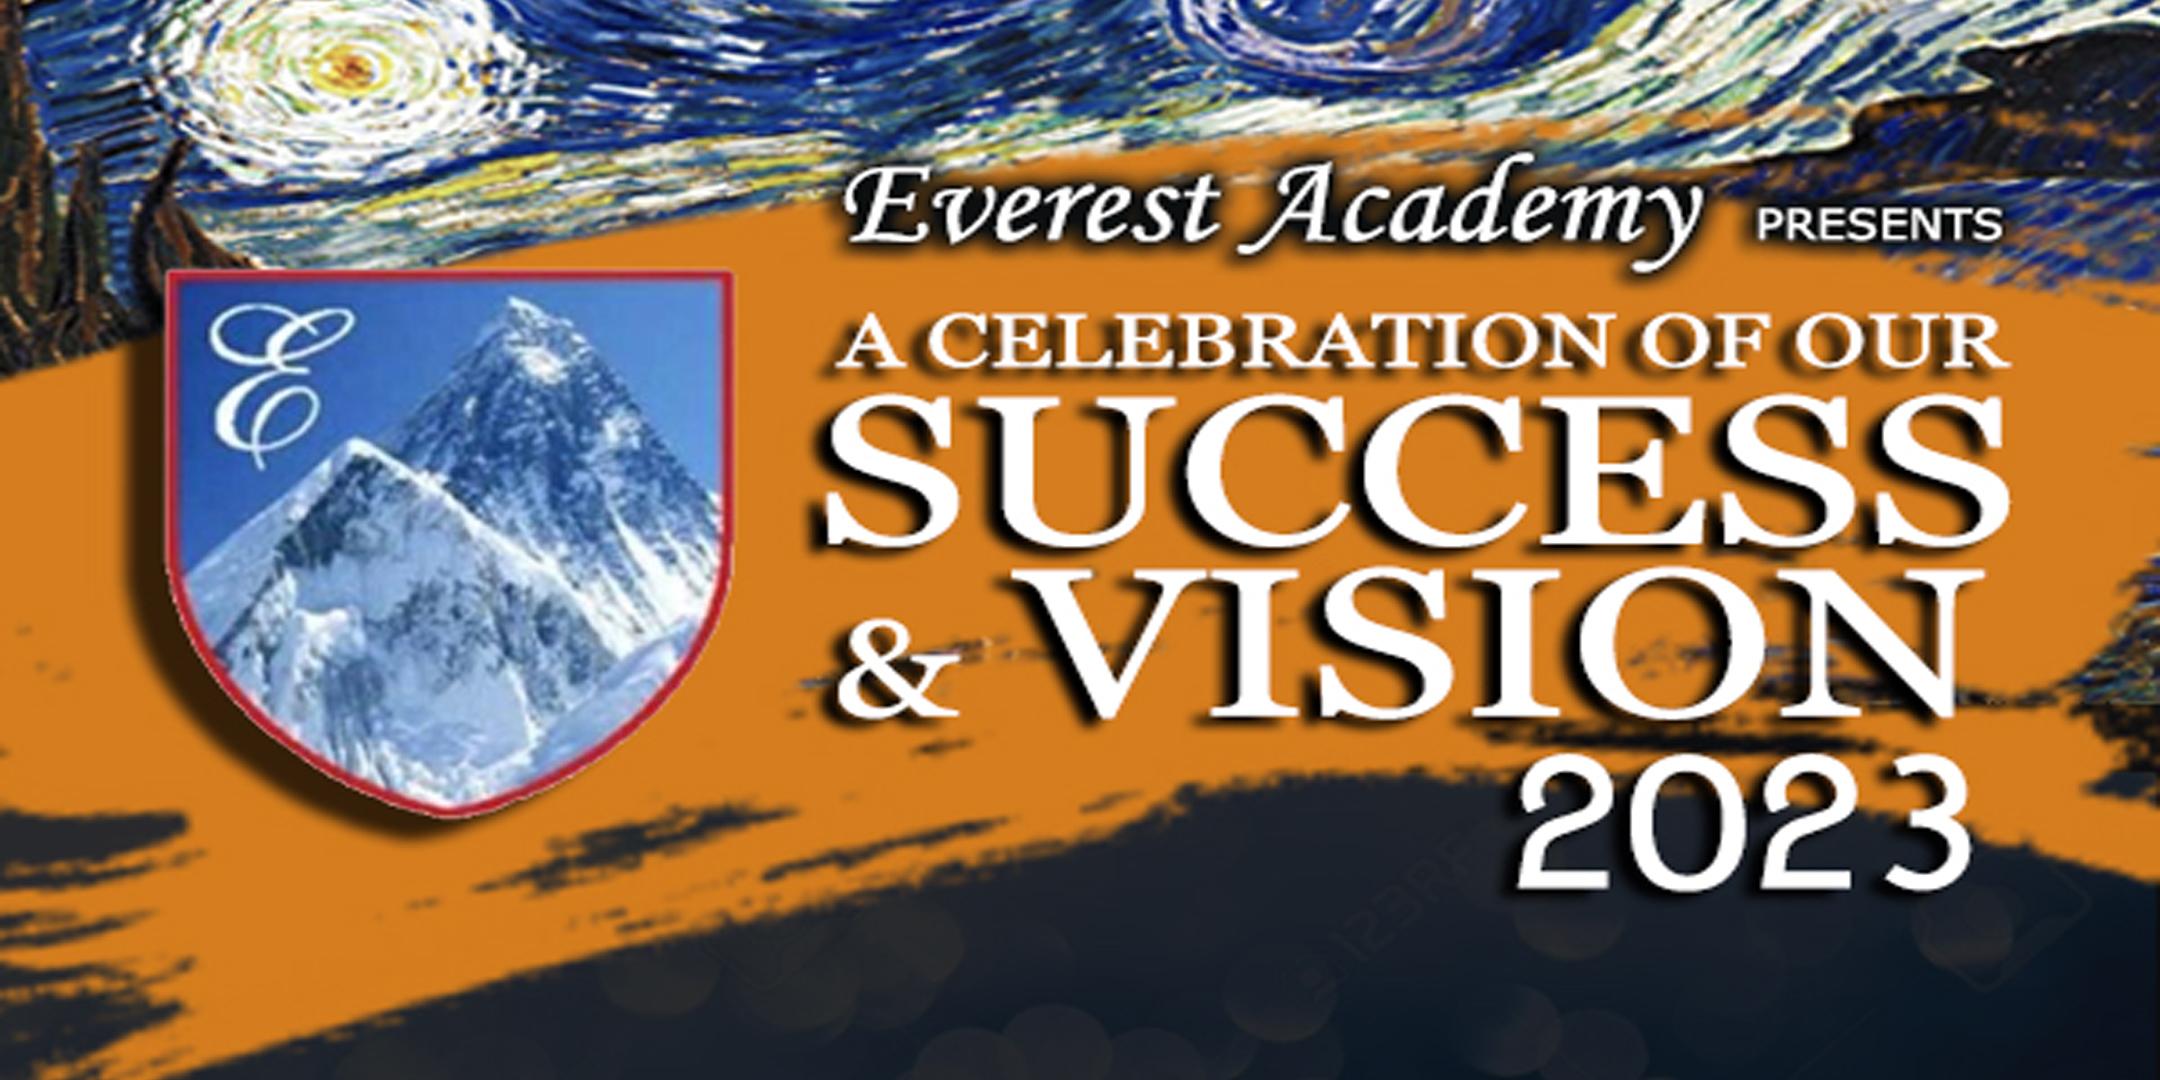 Celebration of Everest Academy’s Success & Vision 2023 - Fundraising Dinner